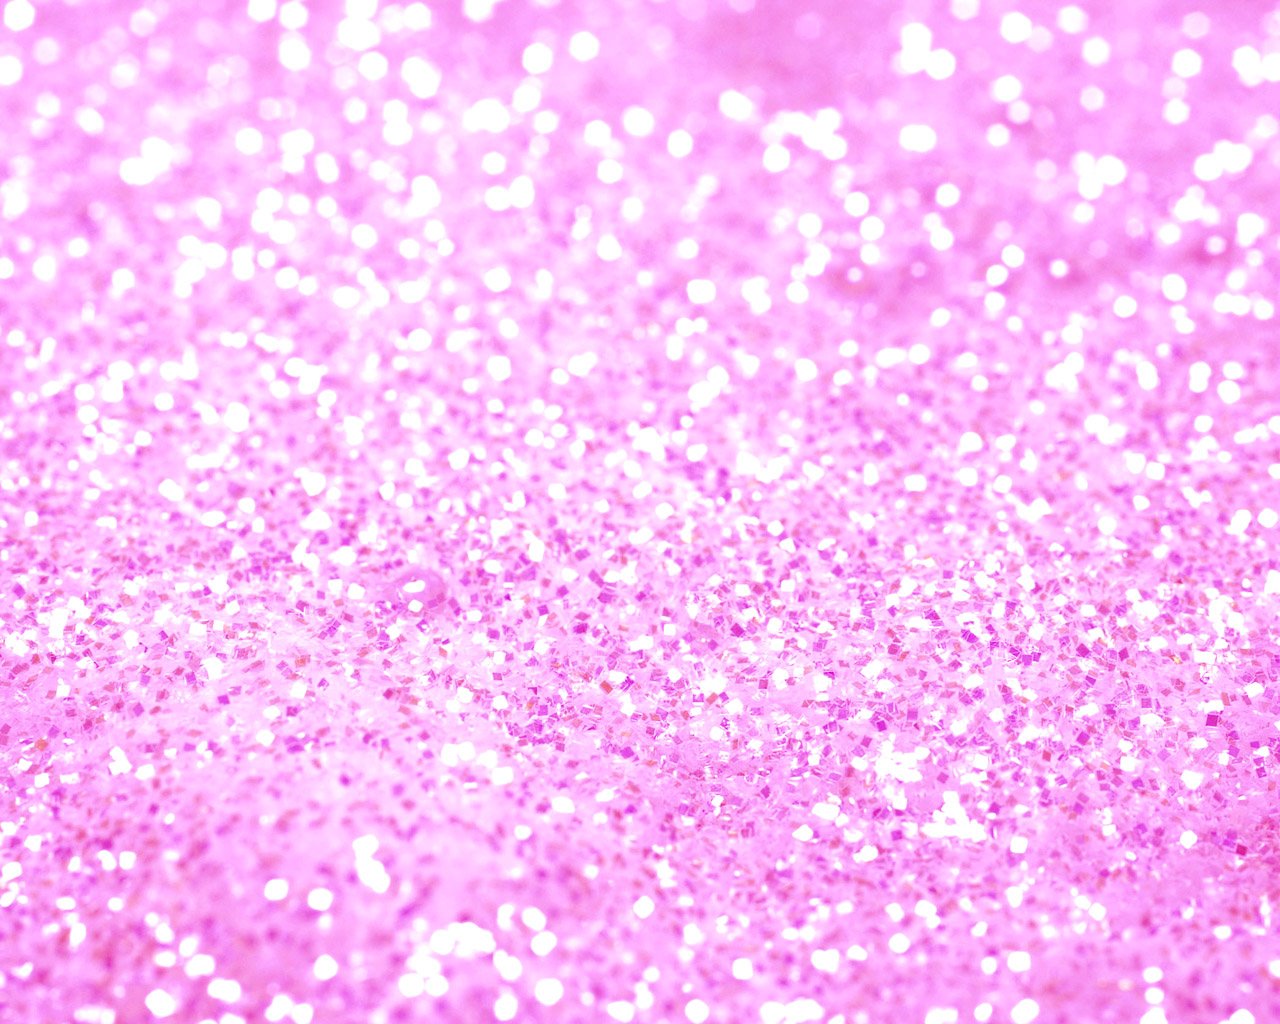 49+] Pink Glitter Wallpaper - WallpaperSafari